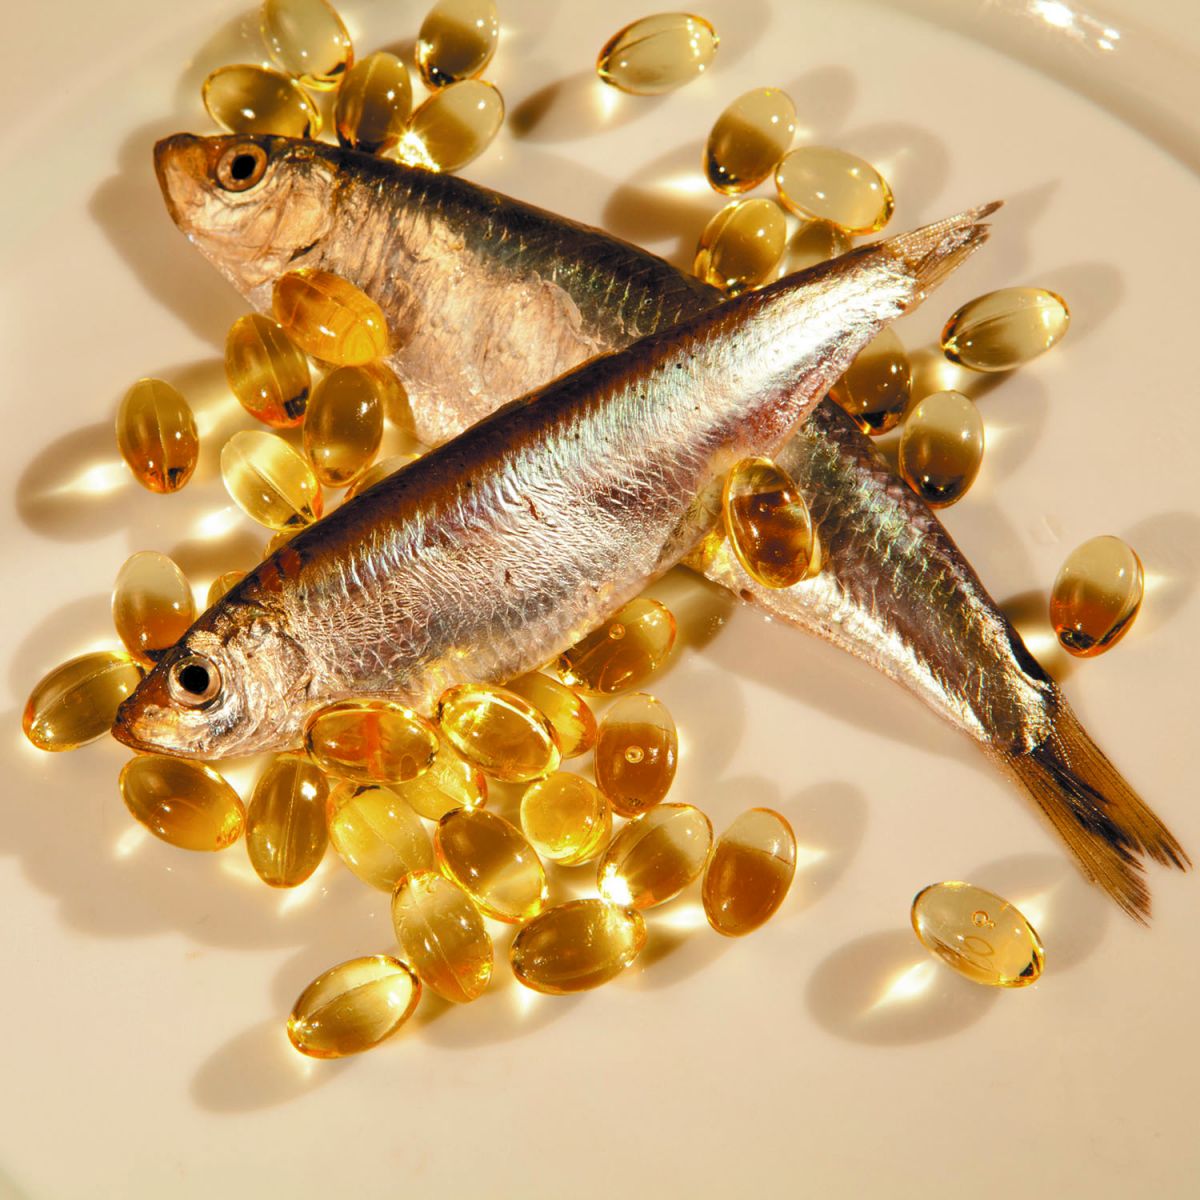 fish-oil-supplements